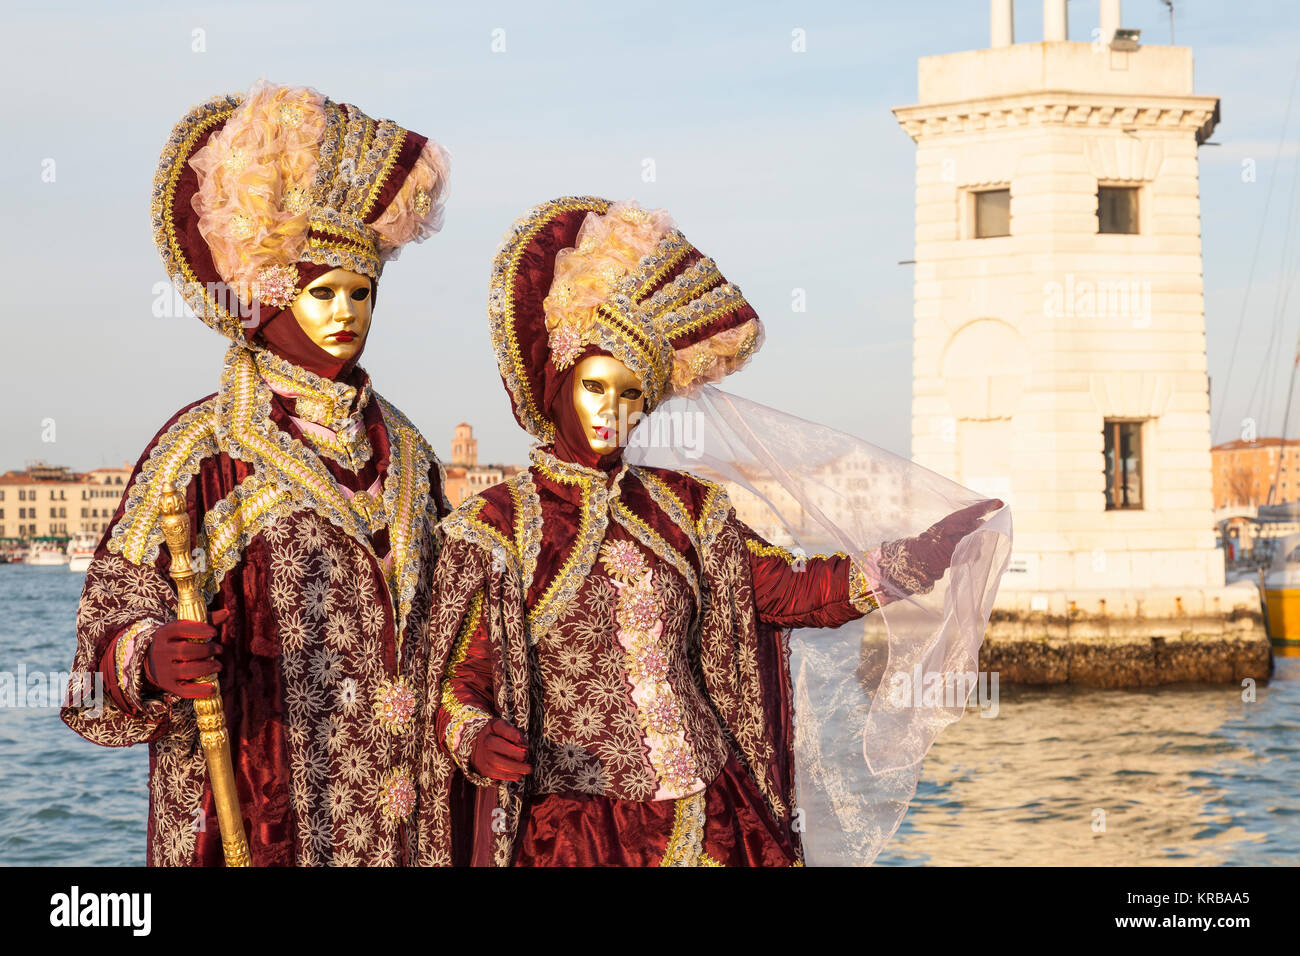 Karneval in Venedig, Venetien, Italien, Paar in reich bestickt rot Kostüme  im Santa Maria Giorgio Leuchtturm bei Sonnenuntergang posing  Stockfotografie - Alamy